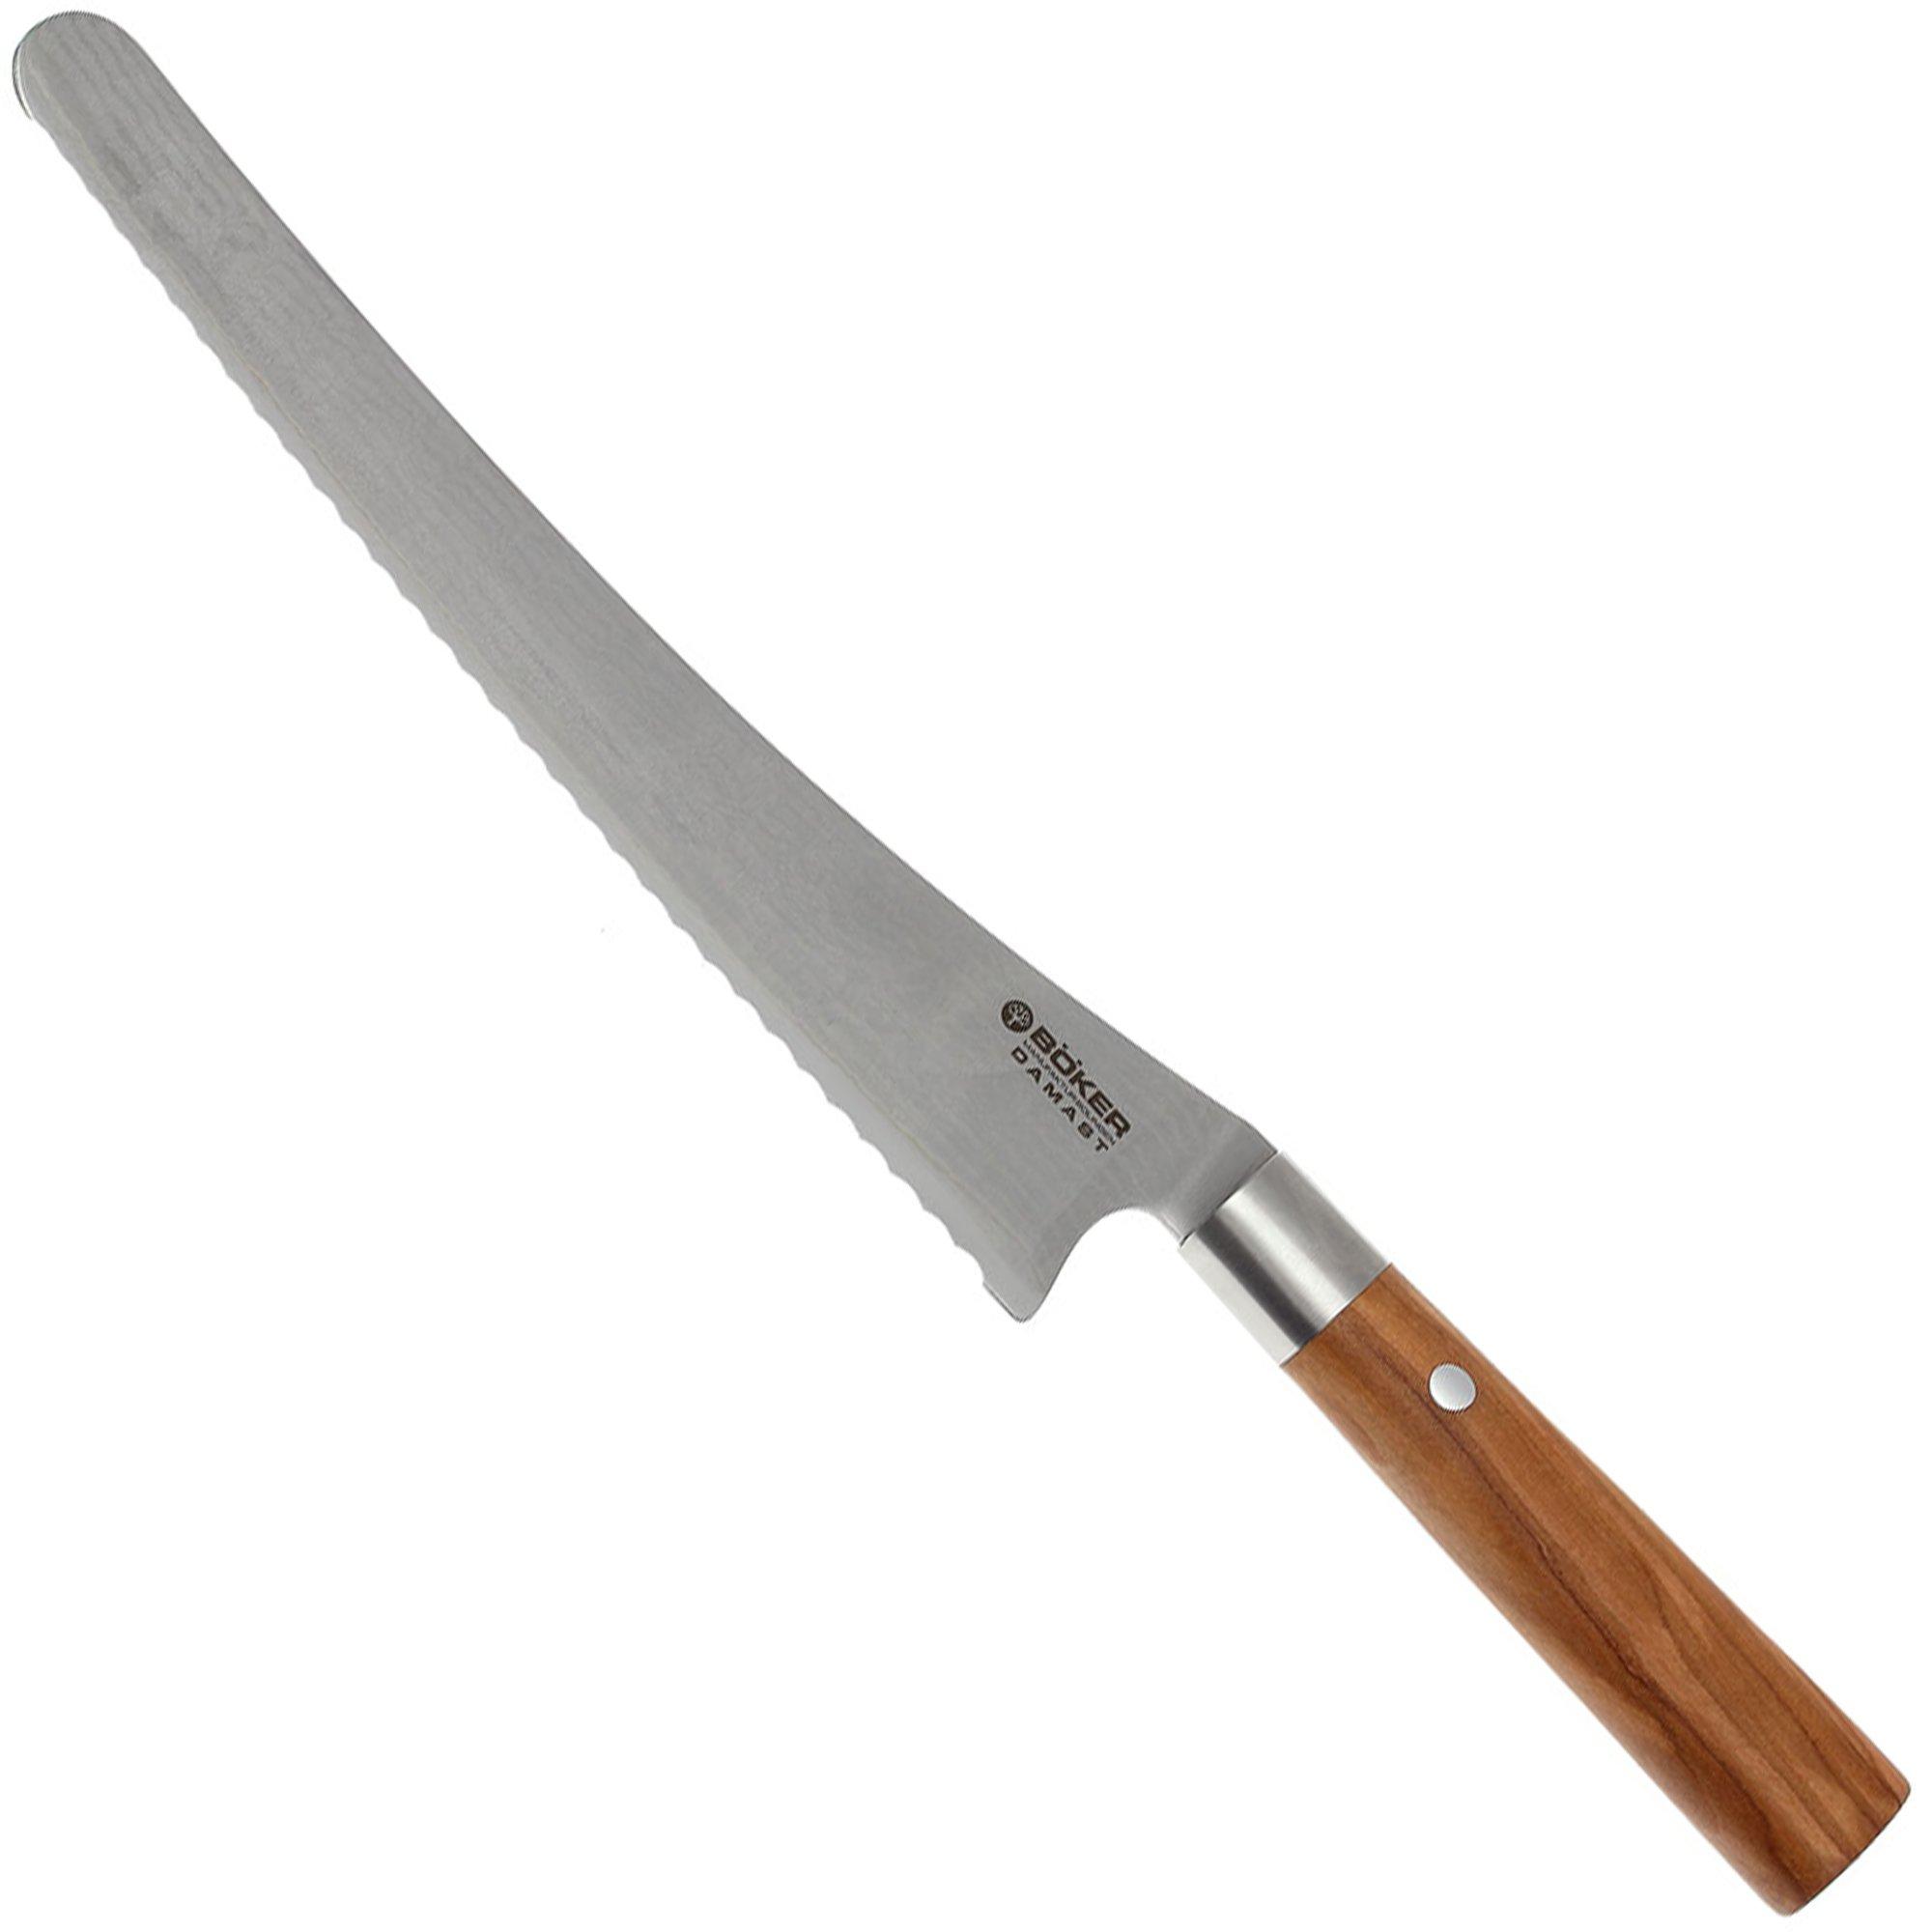 Böker Damast Olive 21.2 cm chef's knife, 130441DAM